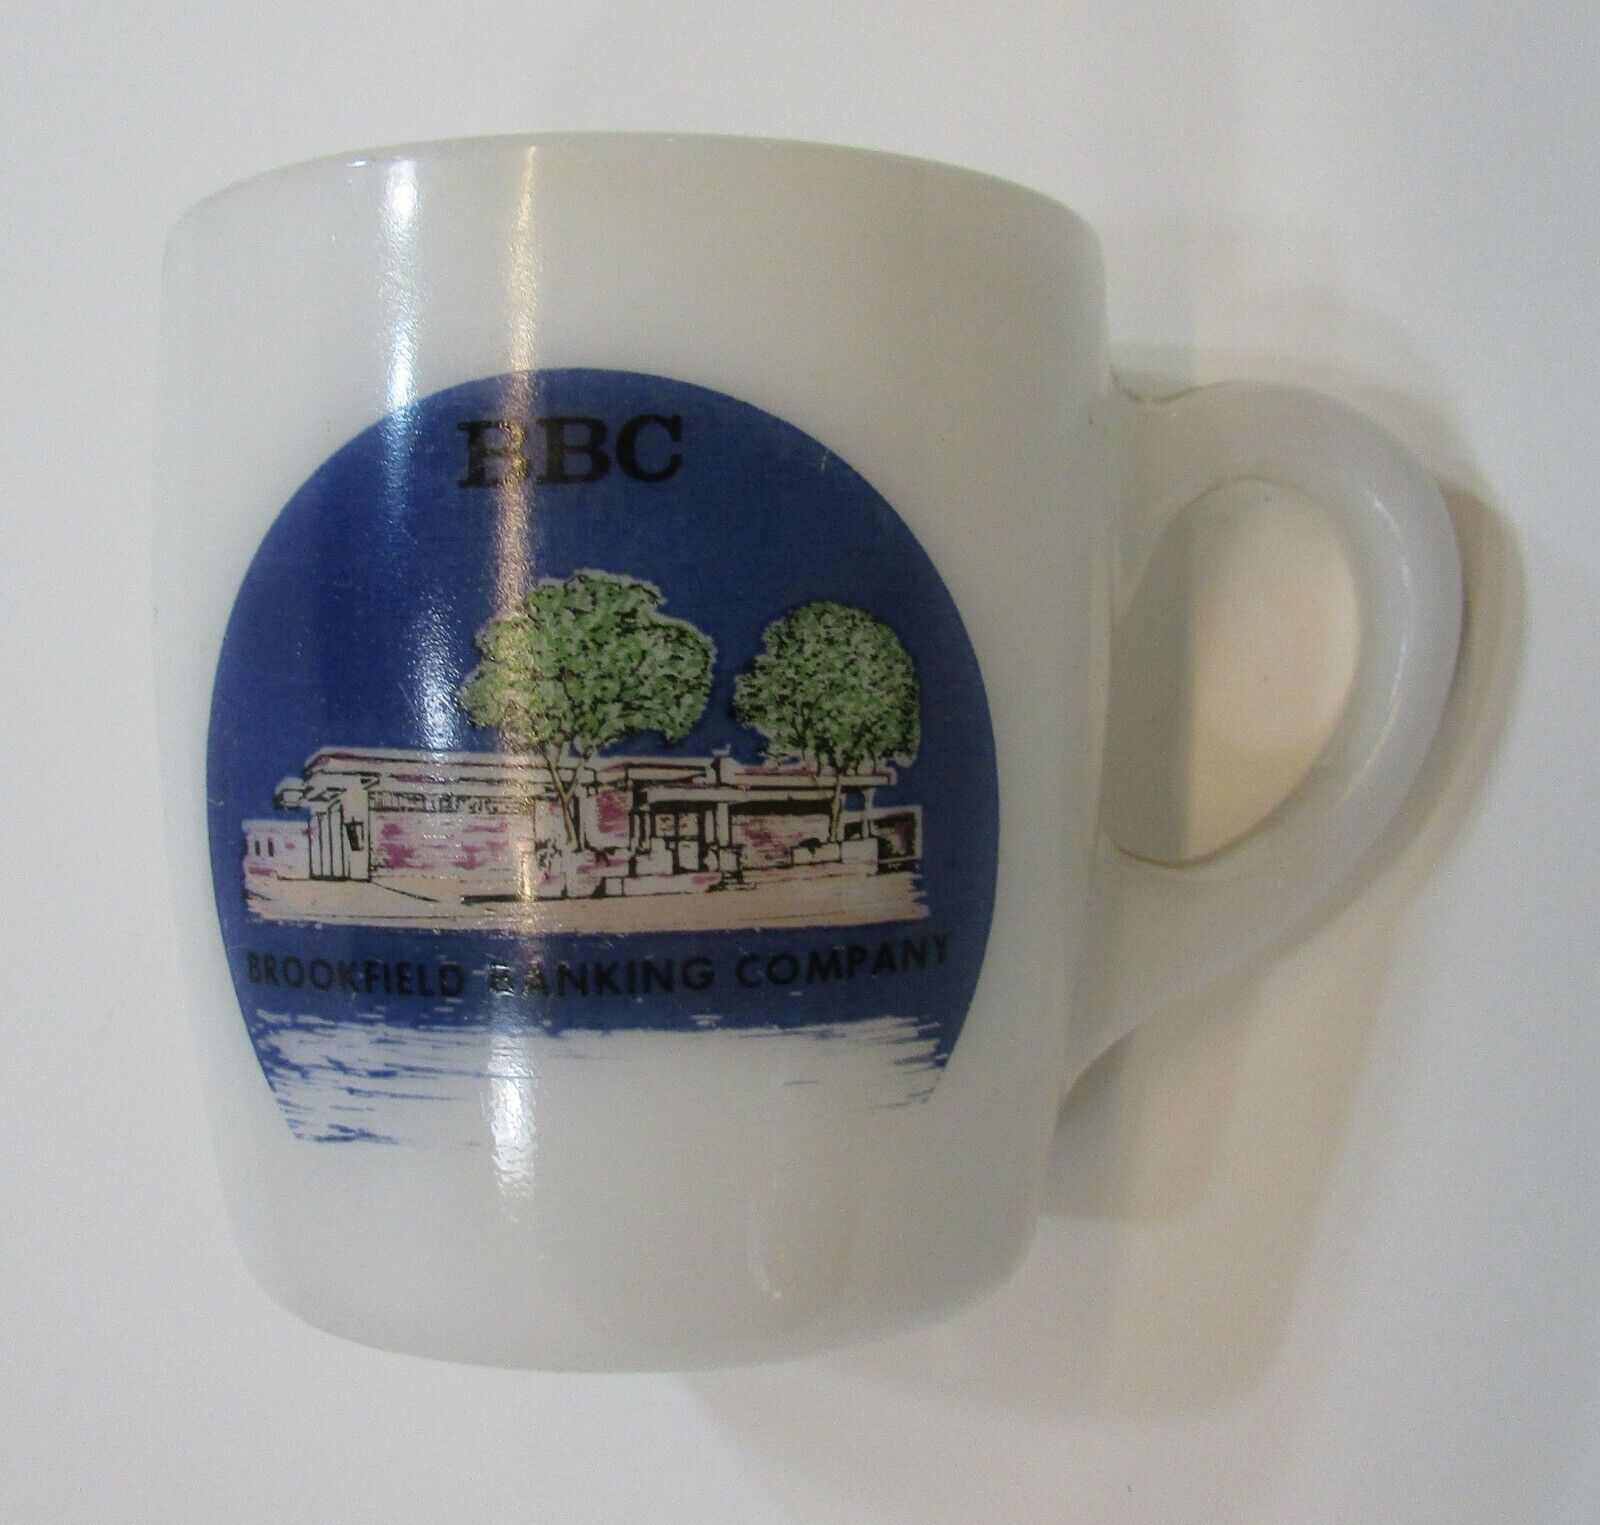 Bbc Brookfield Banking Company Vintage 1970's White Milk Glass Mug Cup  Free S/h